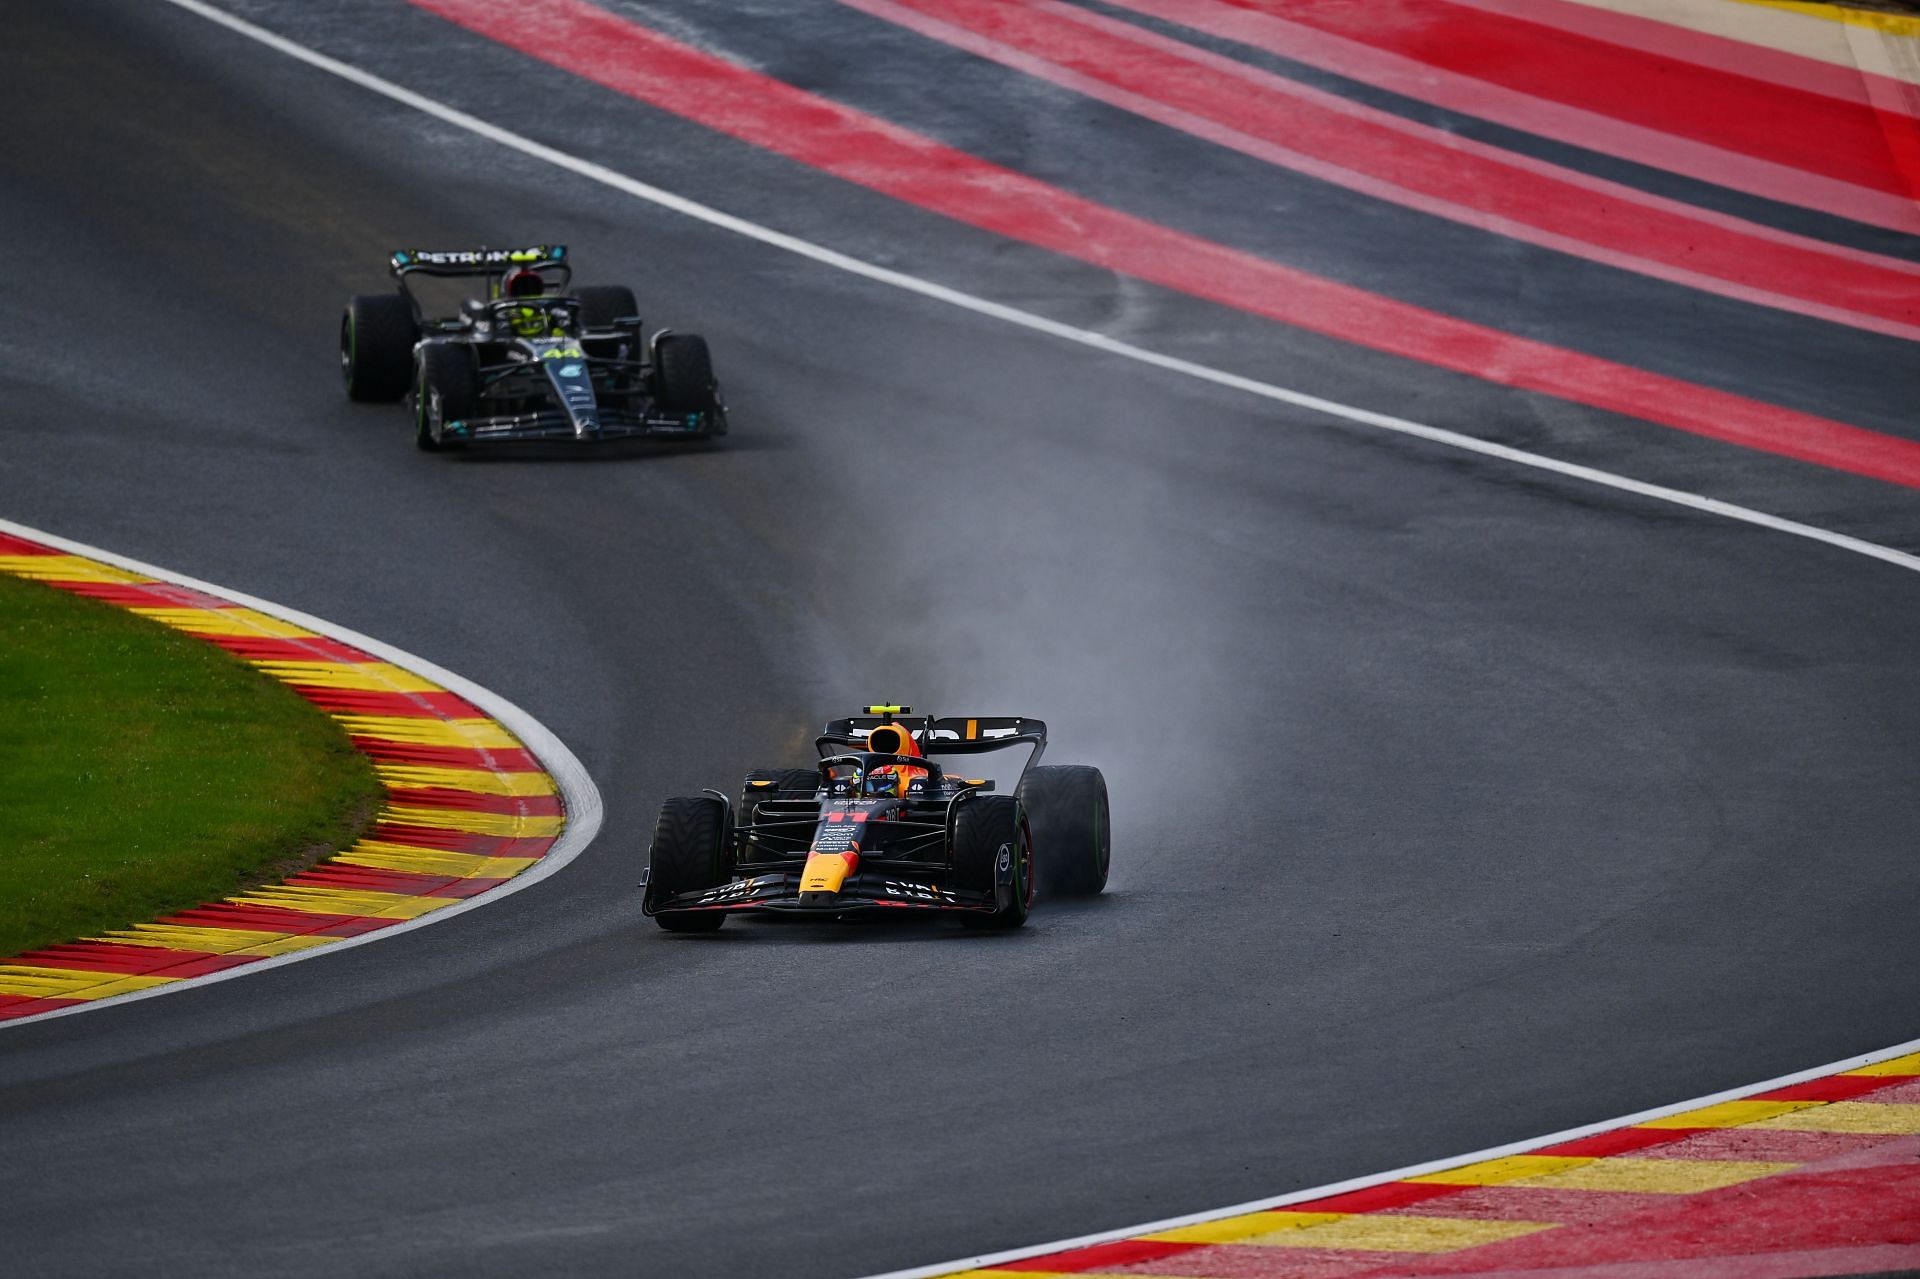 Sergio Perez ahead of Lewis Hamilton in the sprint race